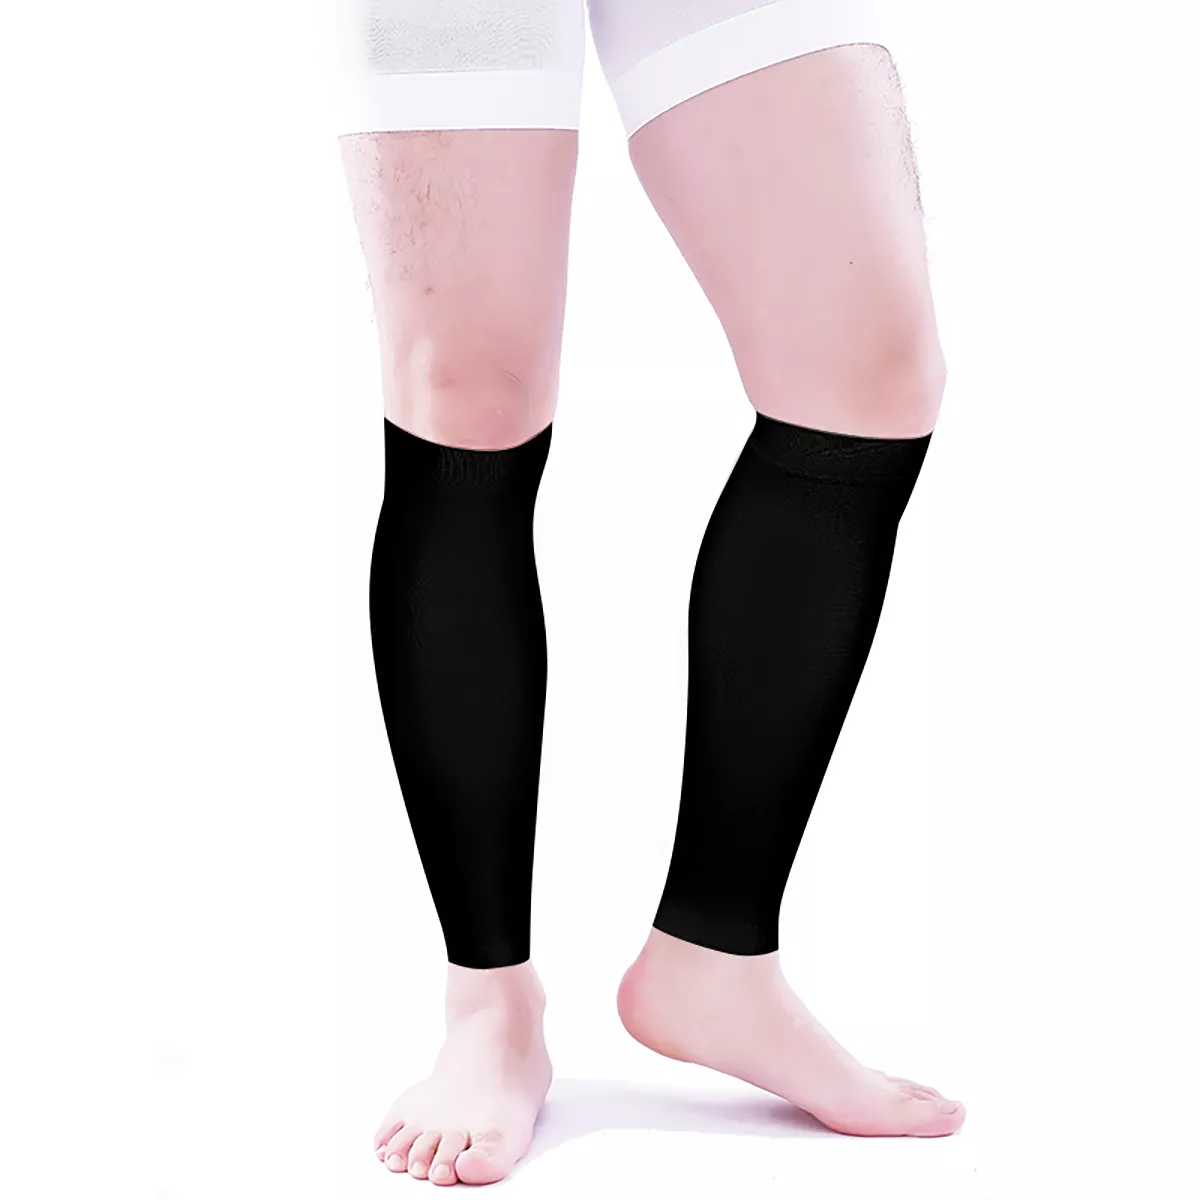 Varcoh ® 8-15 mmHg Men Calf Sleeve Compression Socks Black